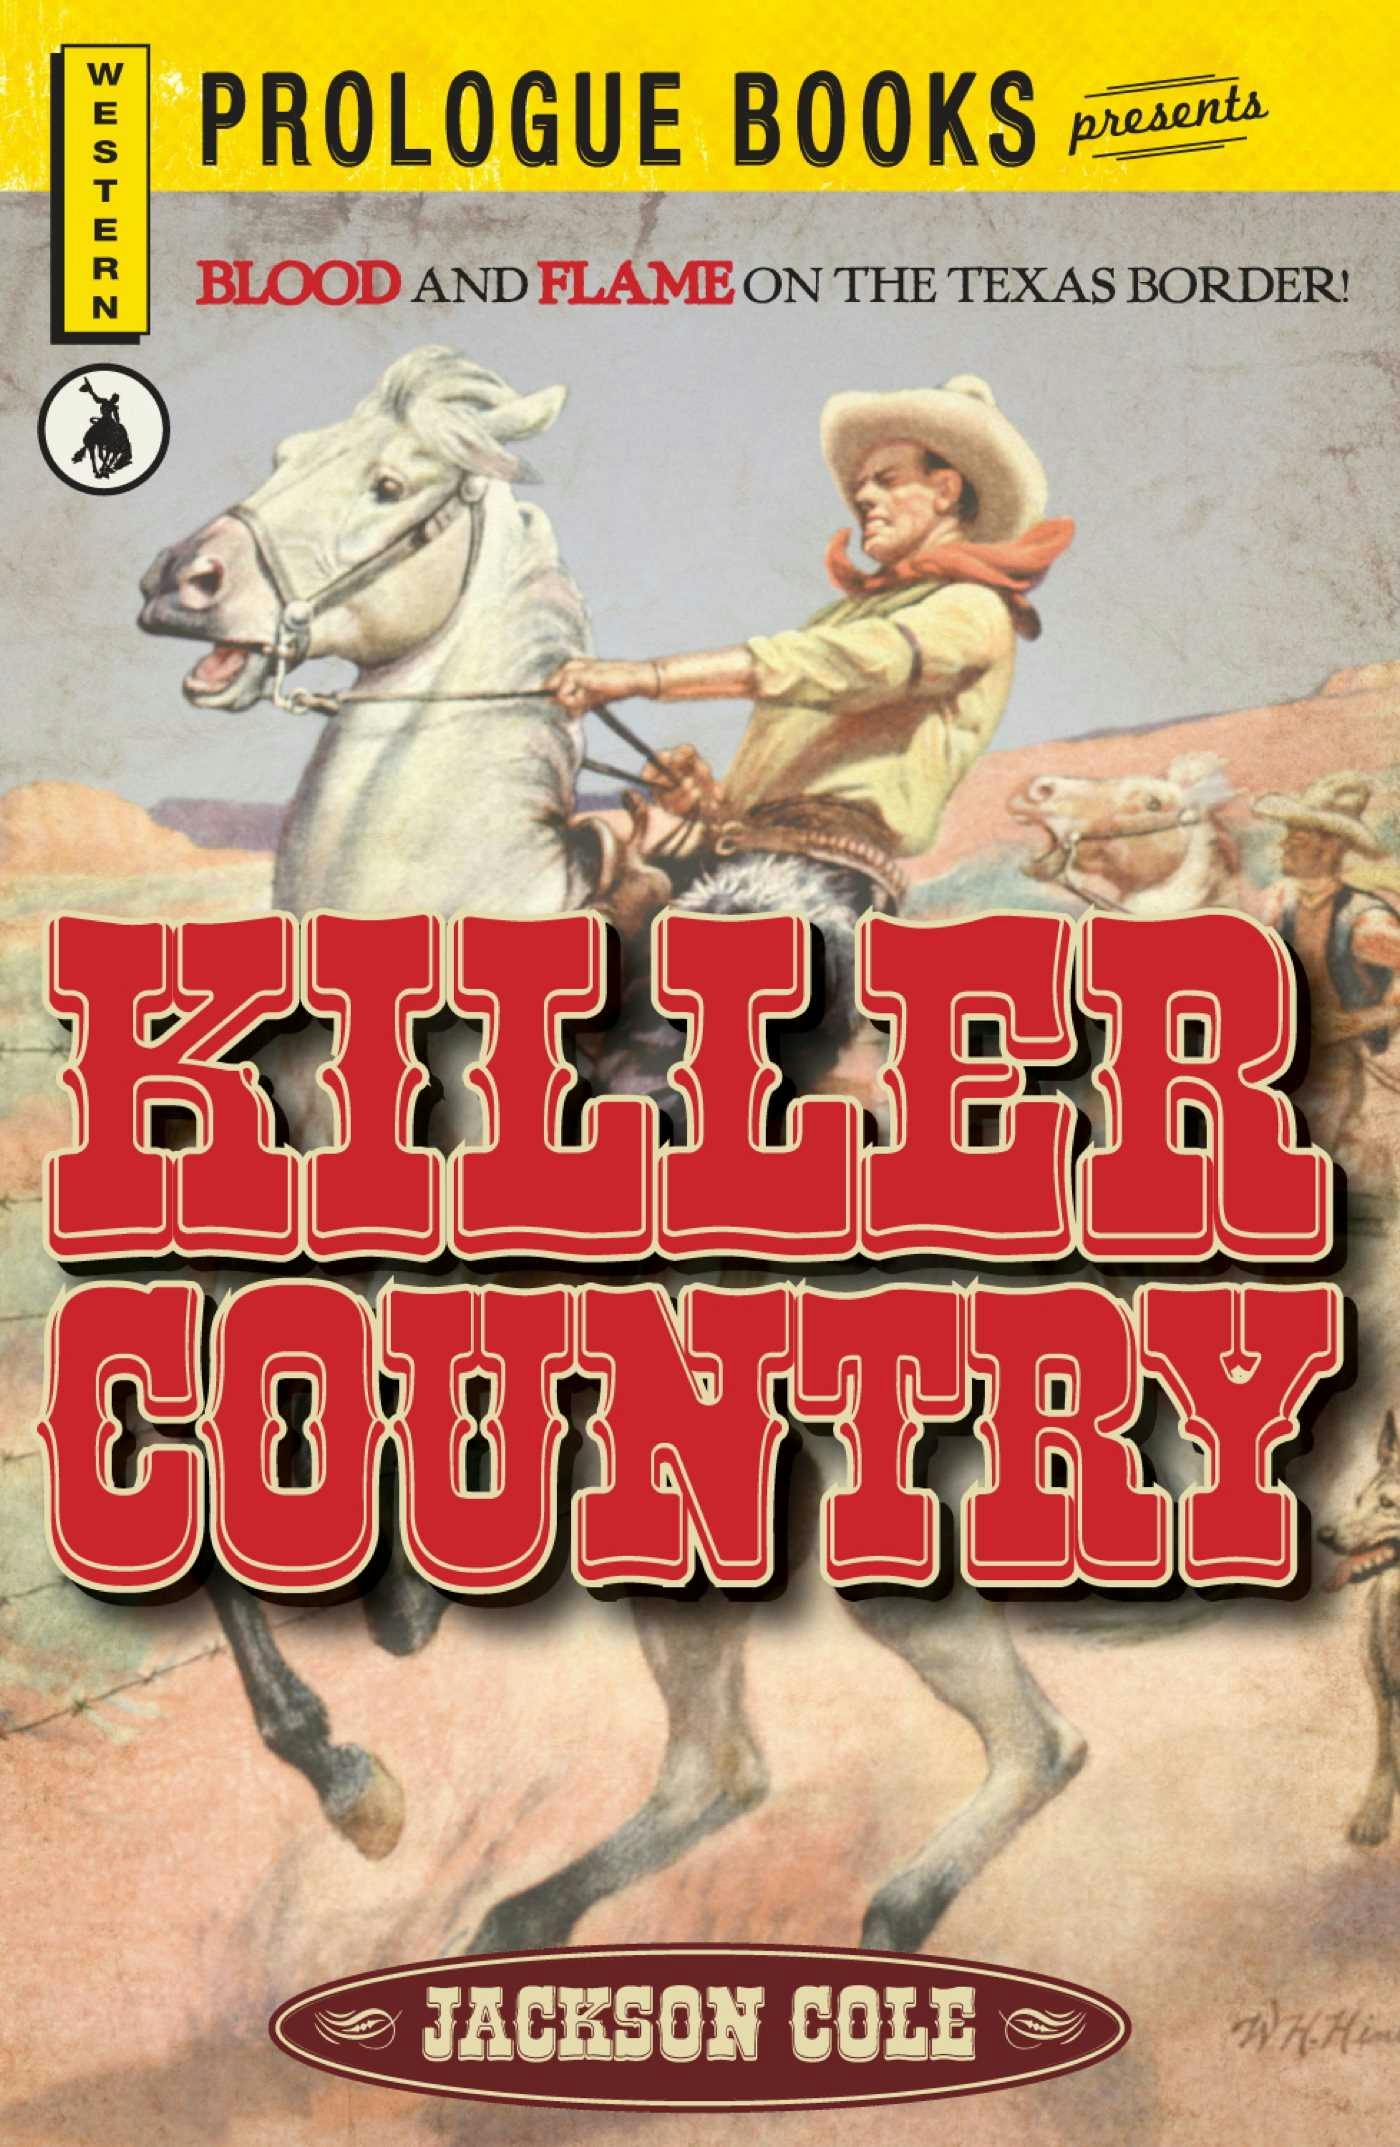 Killer Country - Jackson cole